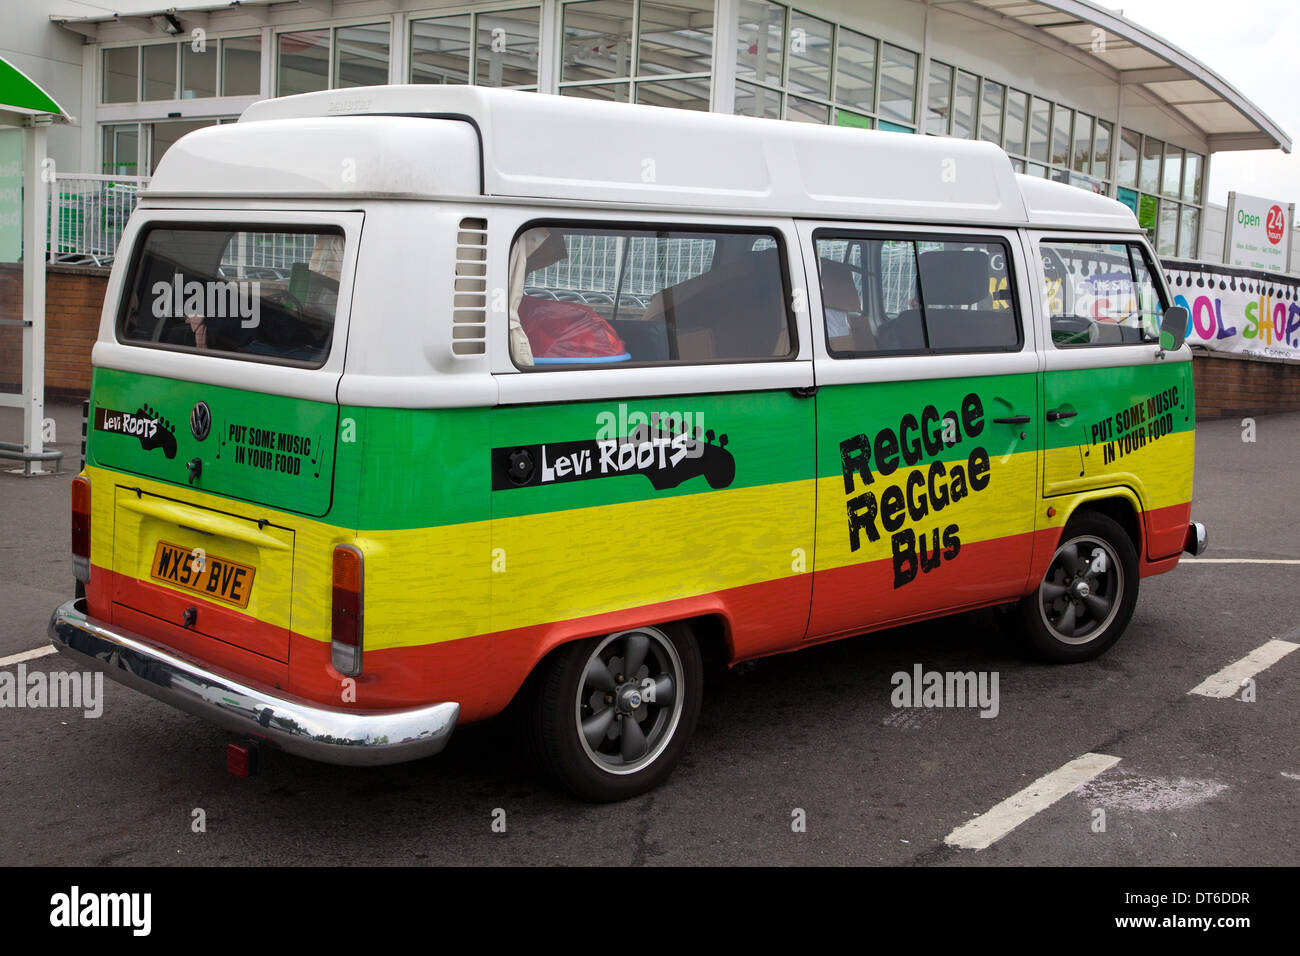 Reggae Reggae Levi Roots Tour Bus at Asda Supermarket Stock Photo - Alamy